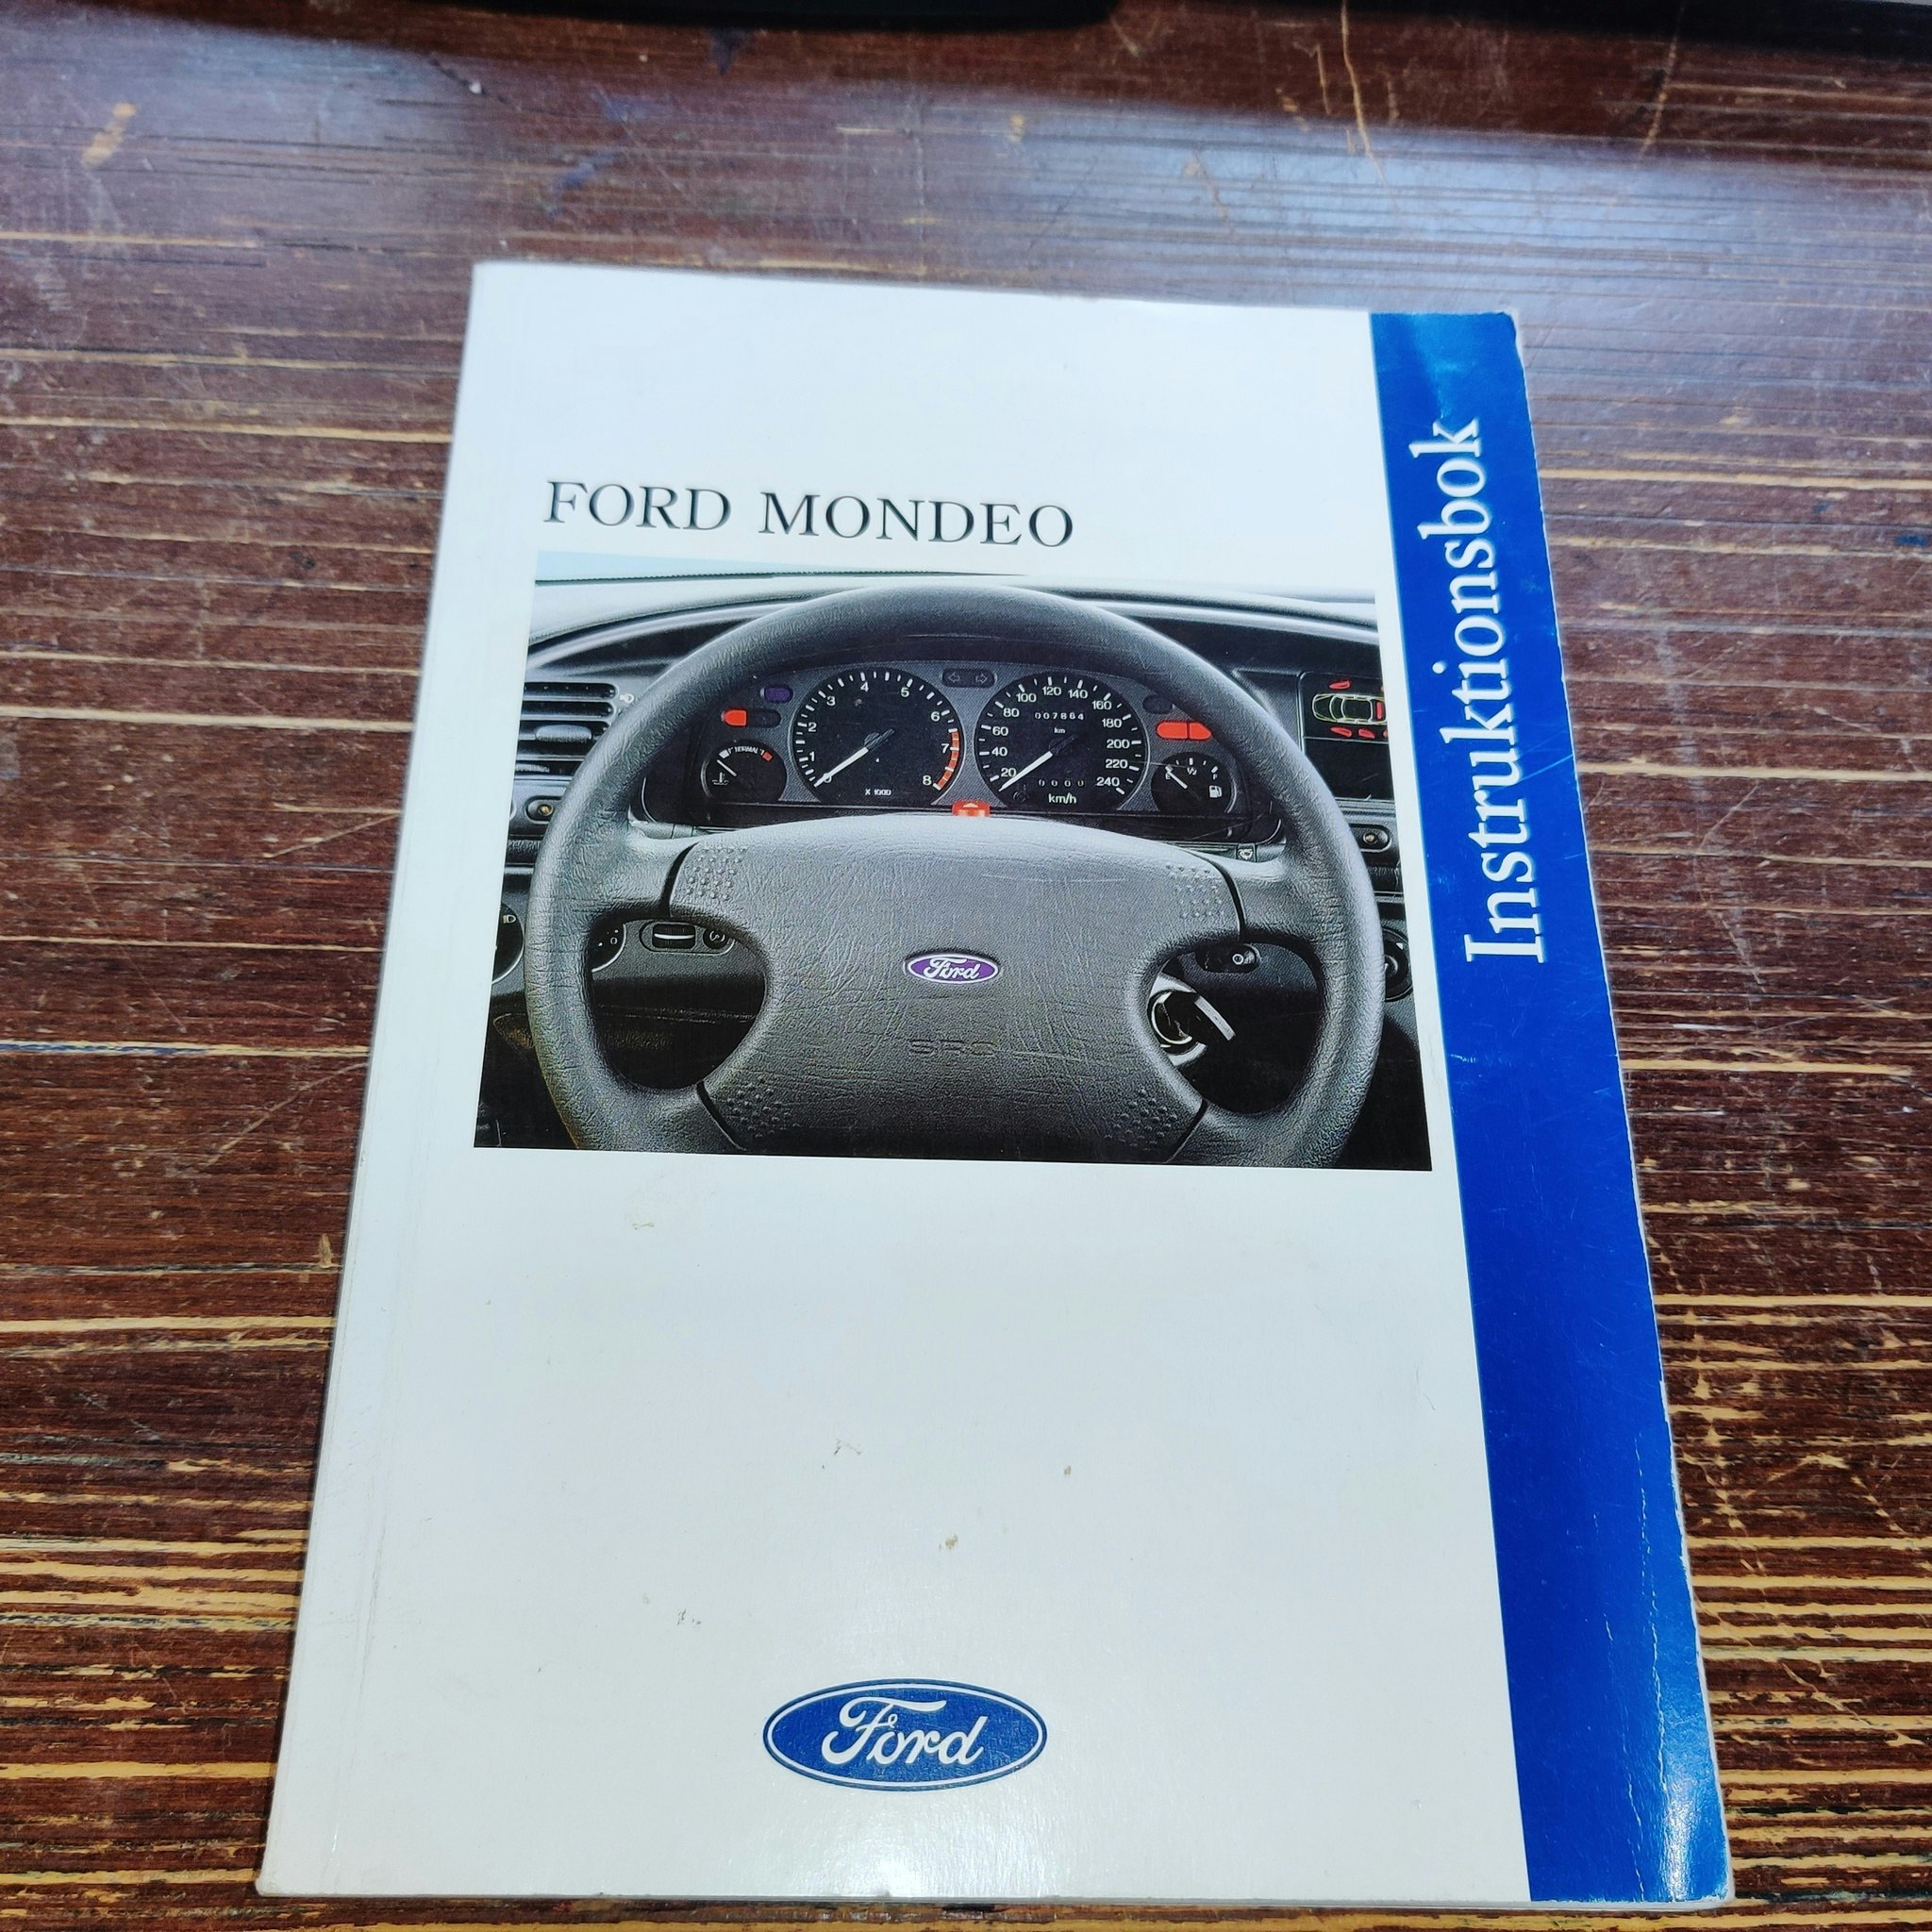 Instruktionsbok - Ford Mondeo Tryckt 2000-12